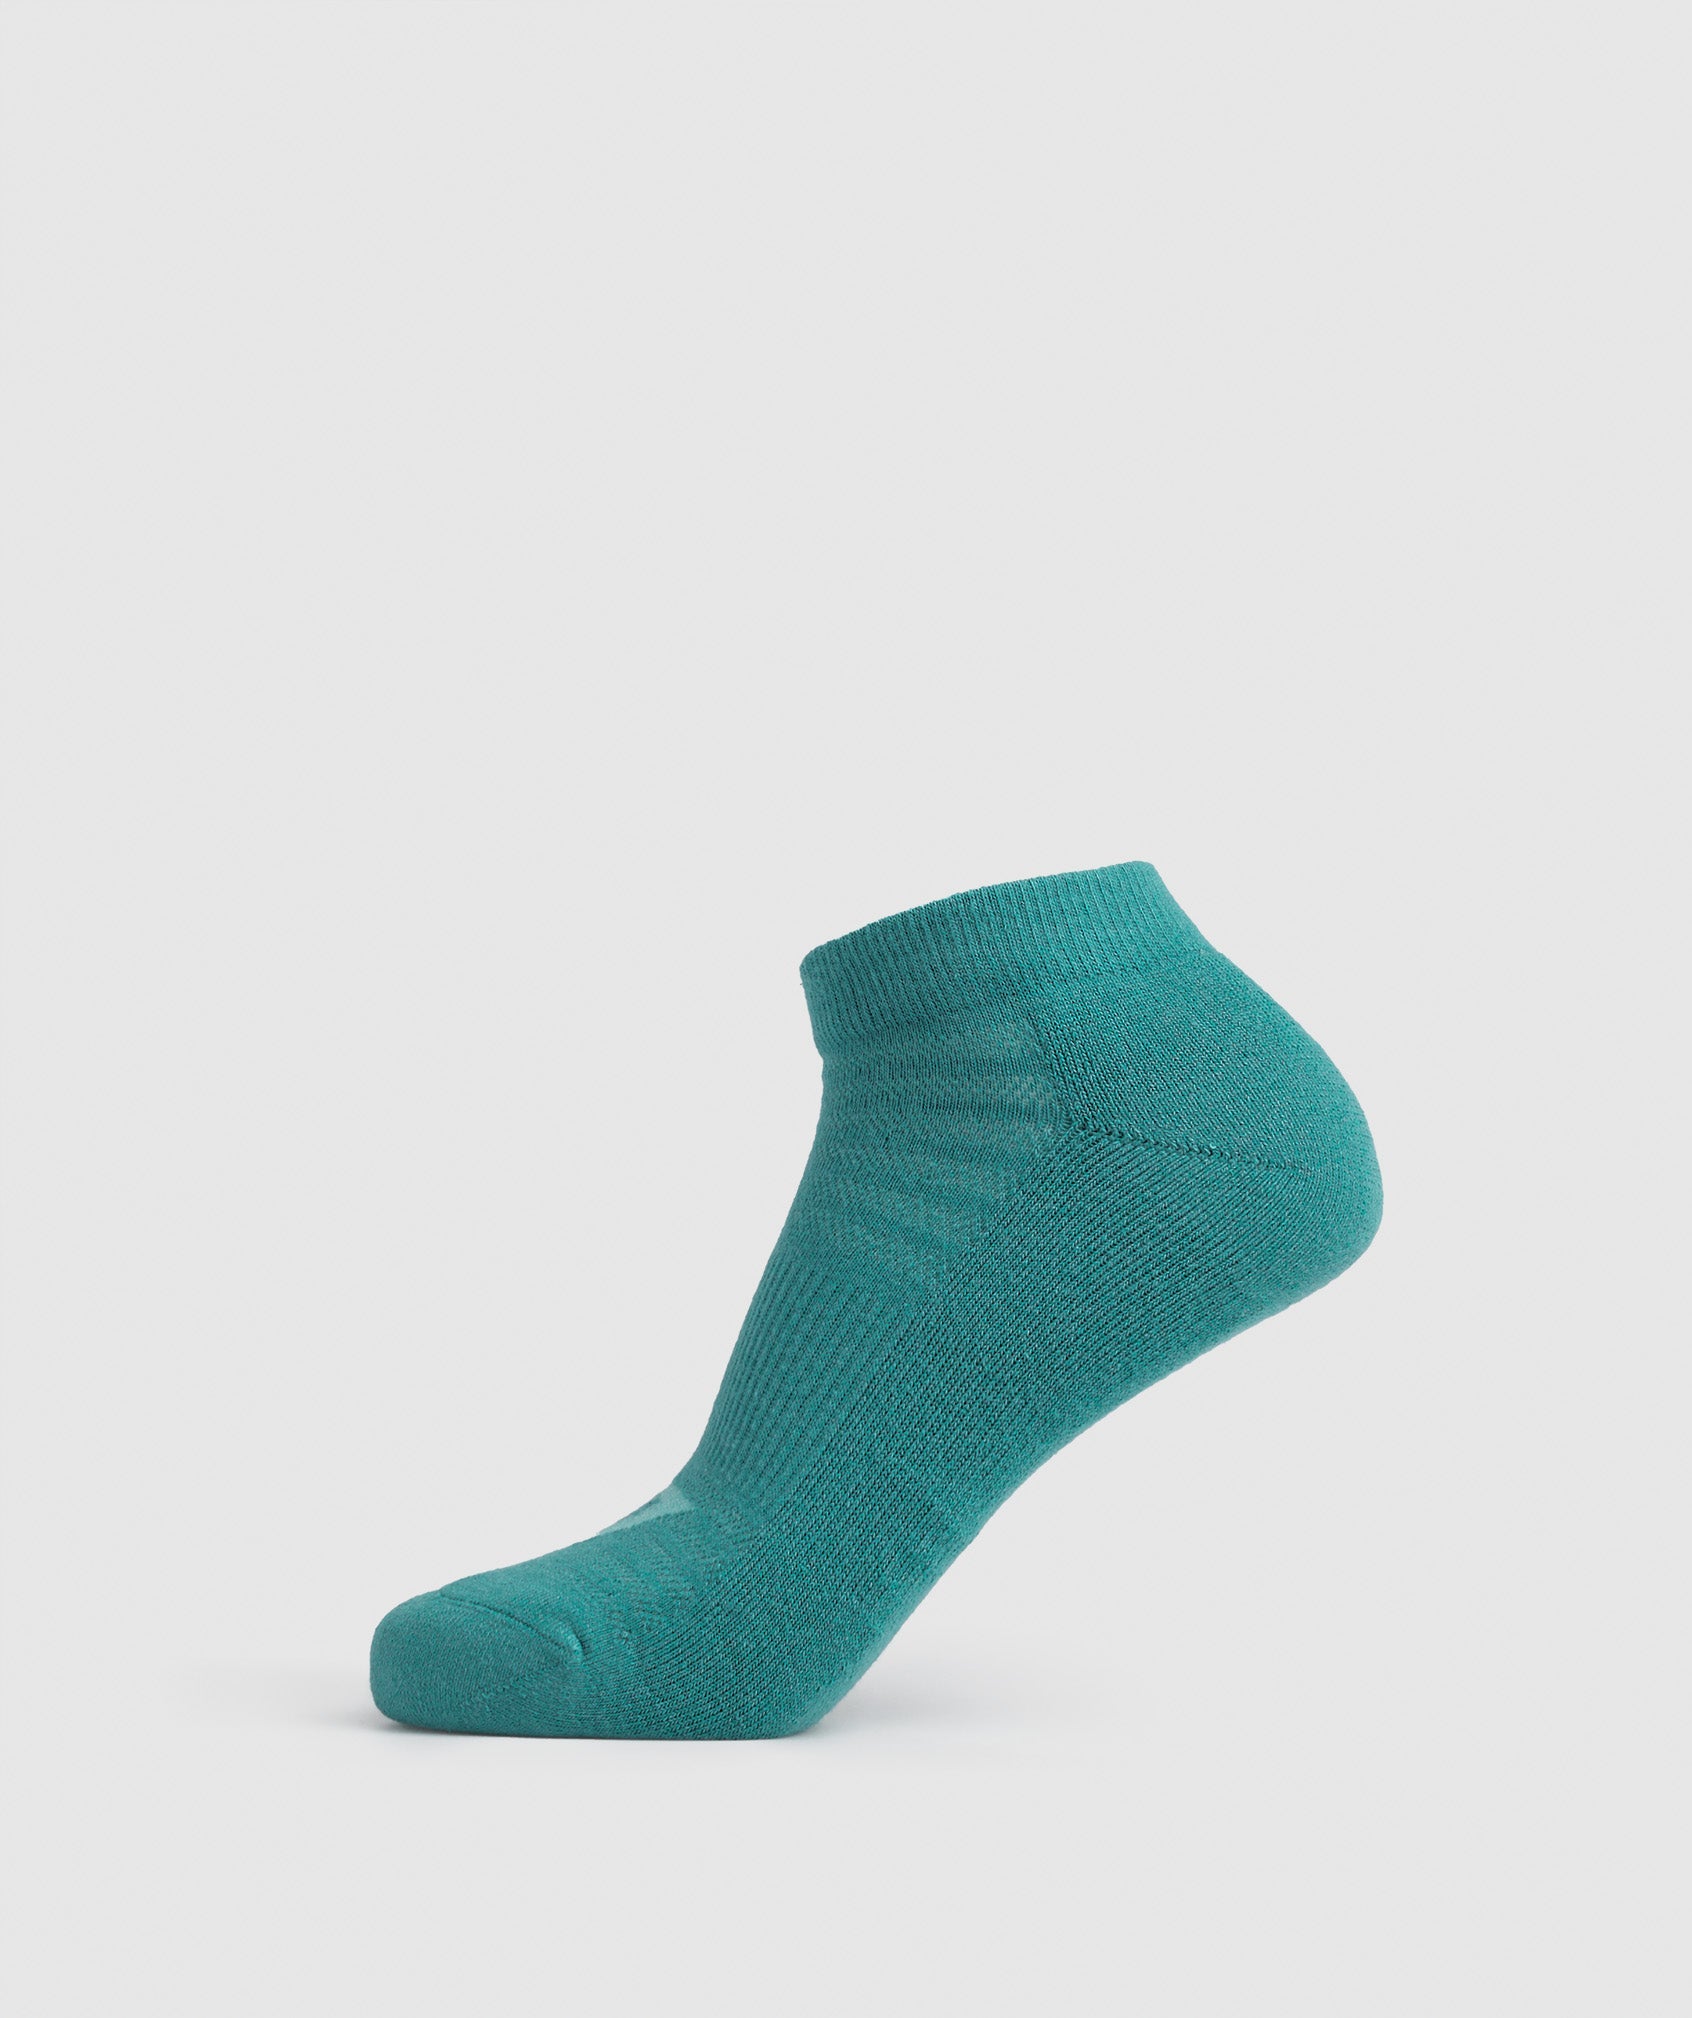 Trainer Socks 3pk in Blue/Jewel Green/Pebble Grey - view 6